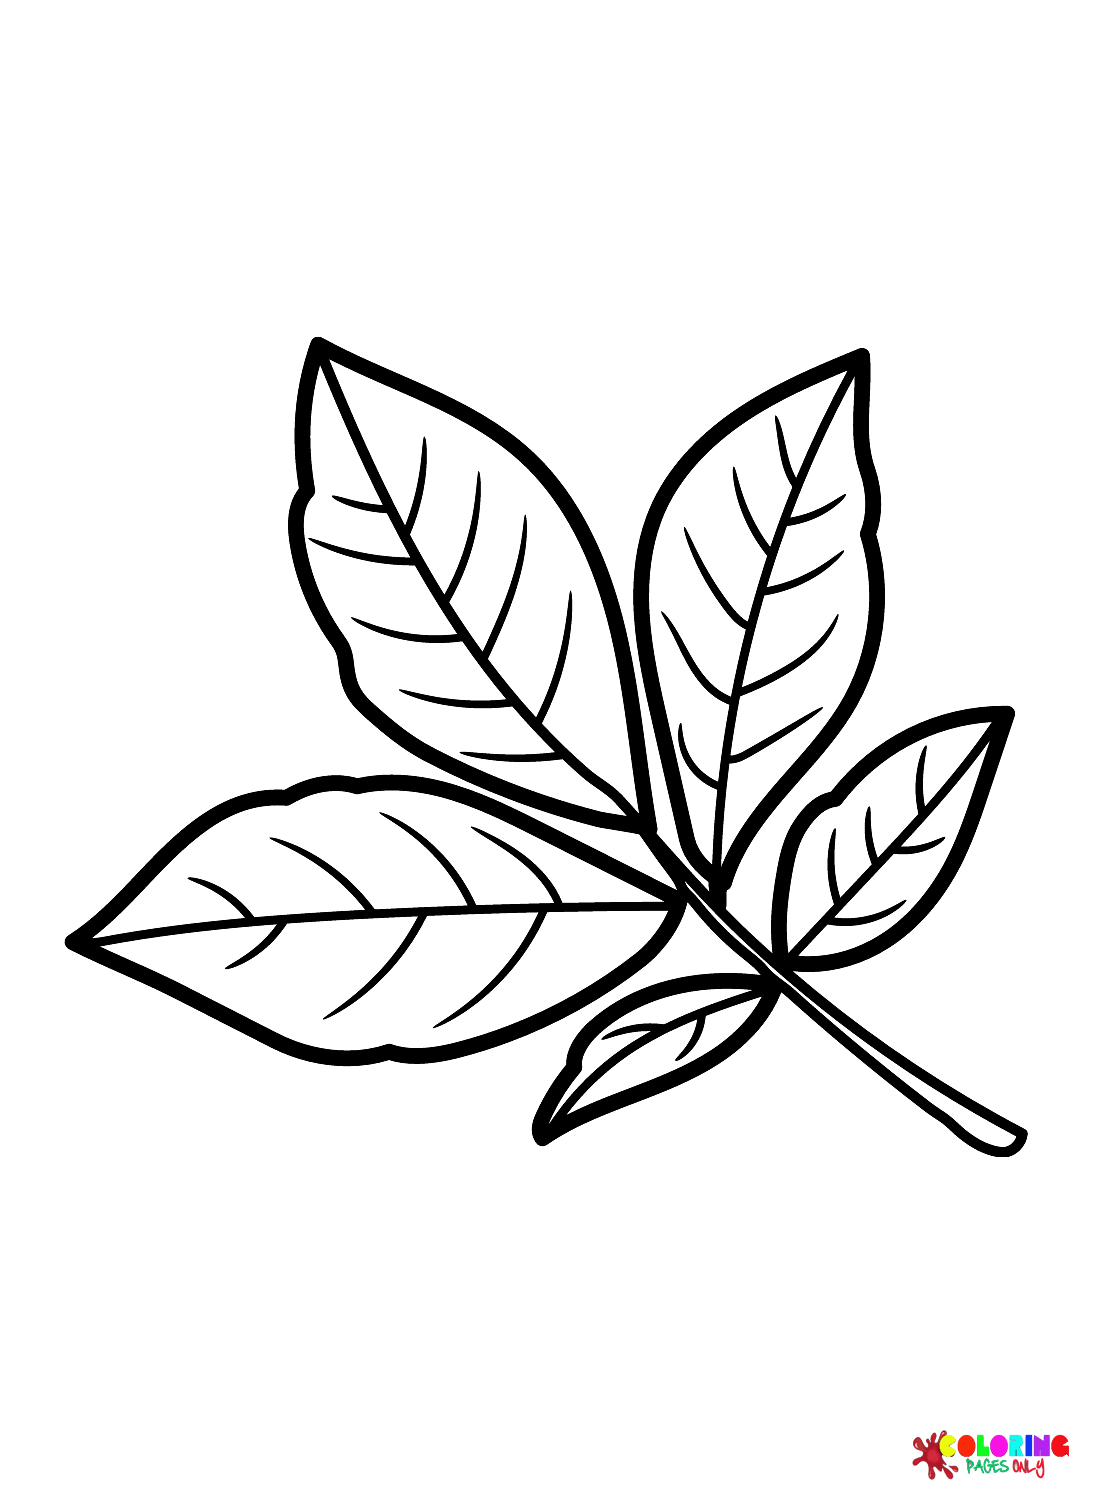 Shagbark Hickory Leaf from Leaves